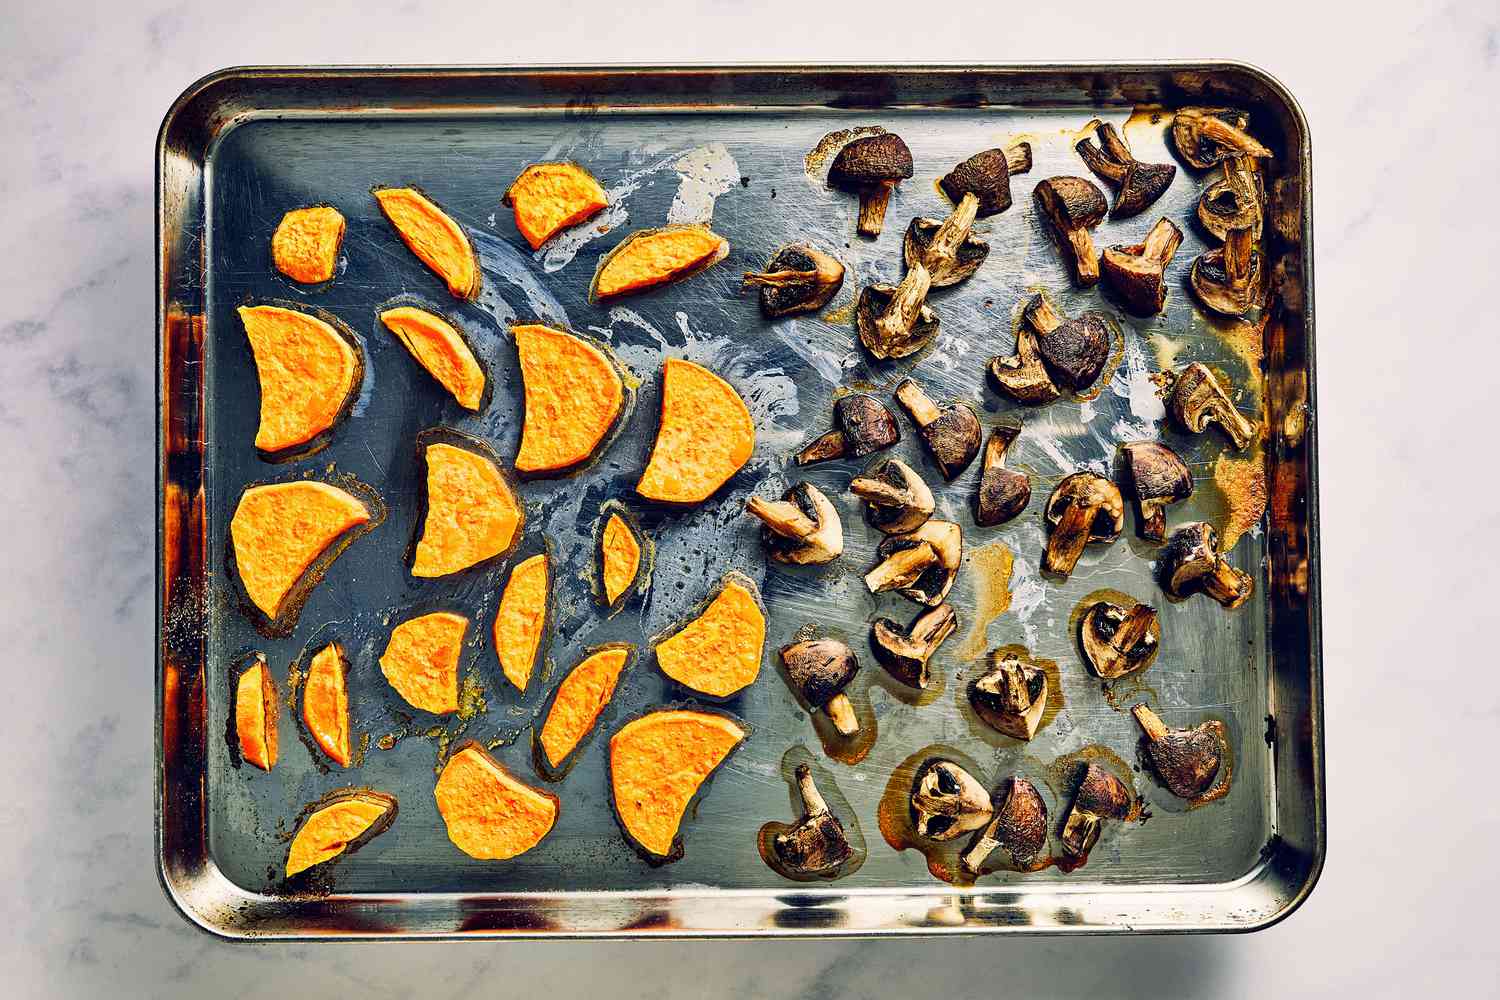 A sheet pan of roasted sweet potatoes and roasted cremini mushrooms